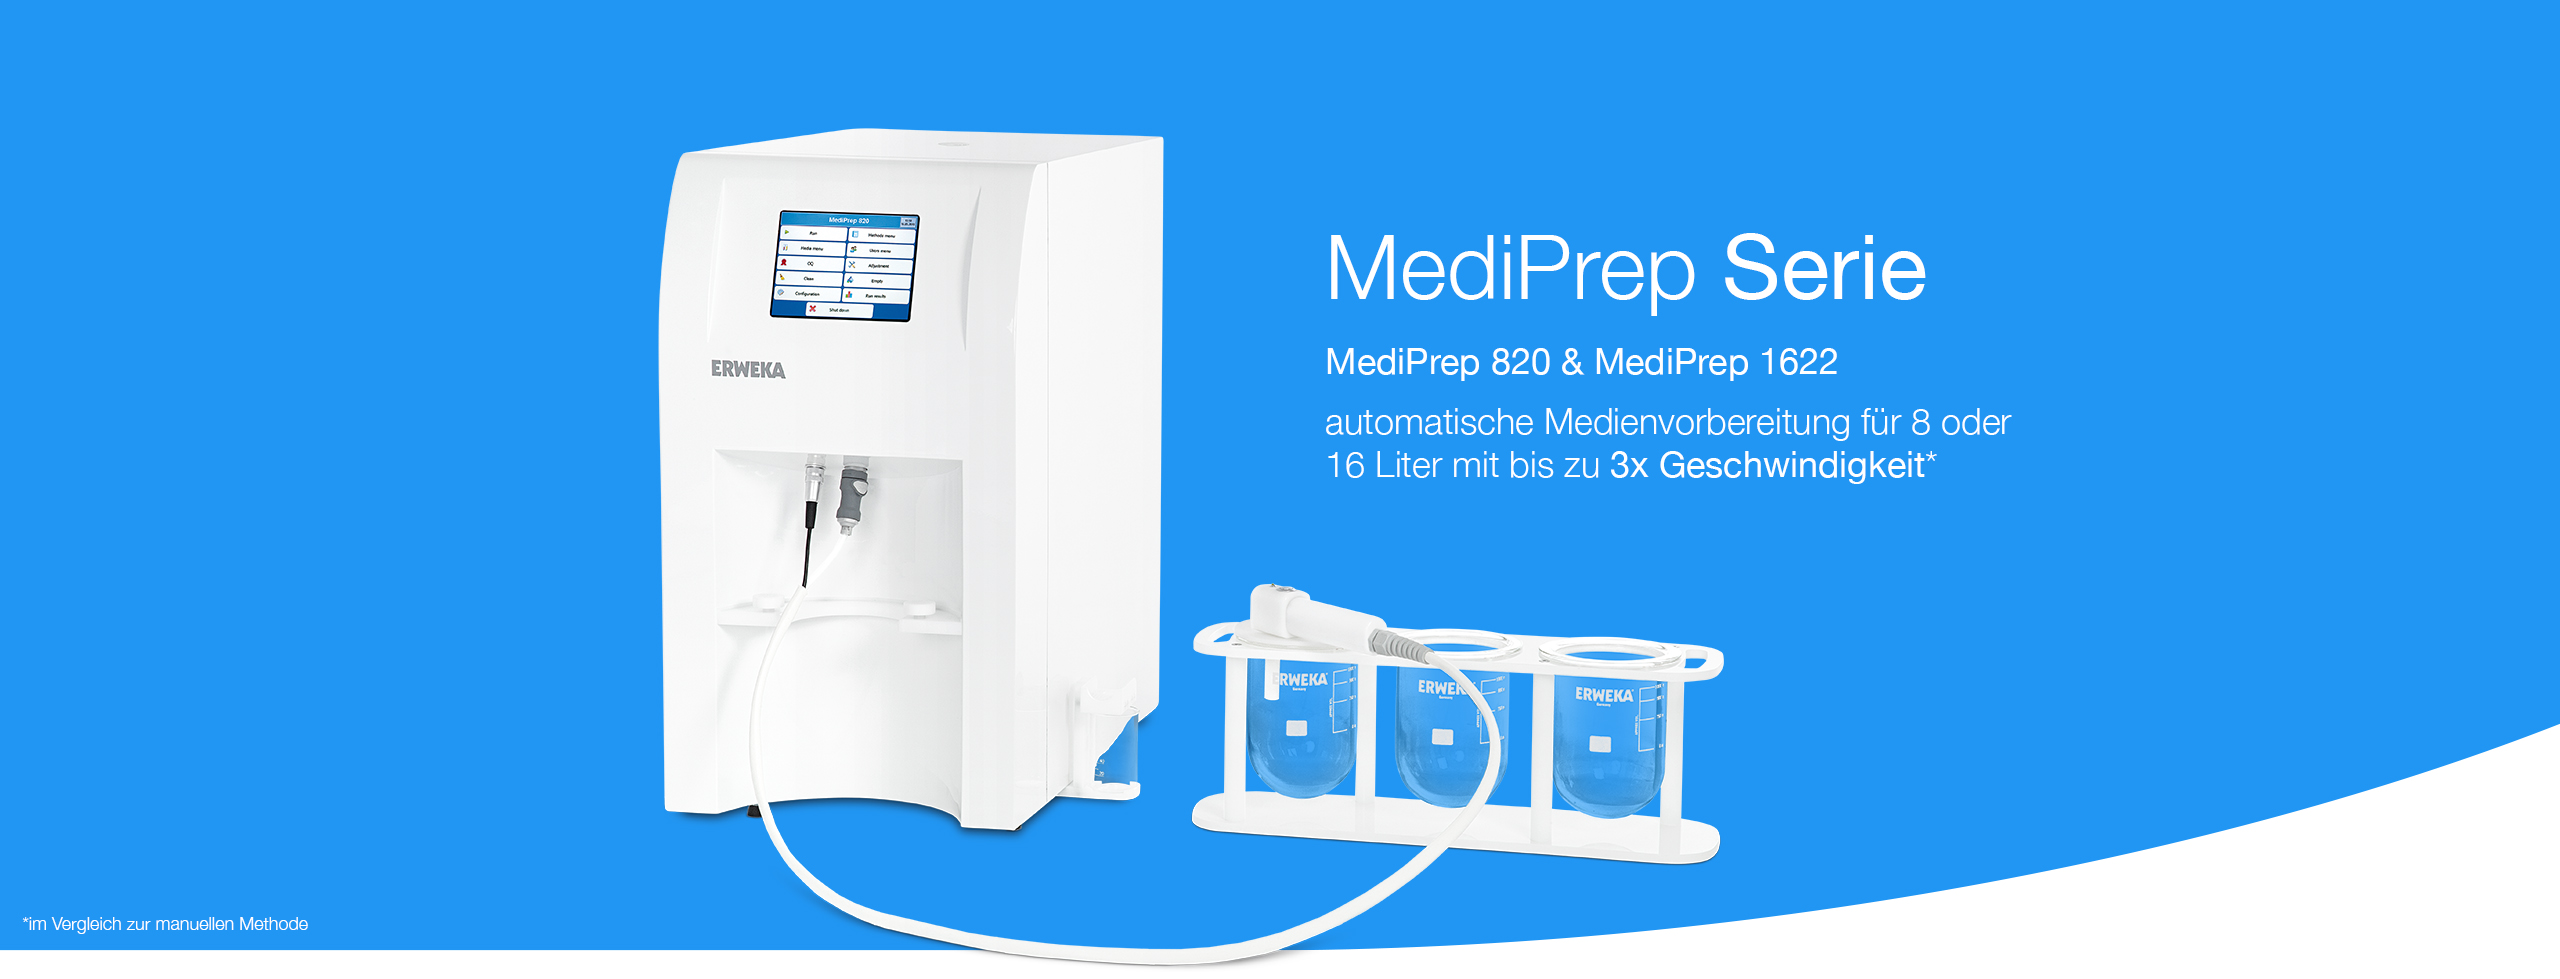 MediPrep Serie Product Seite